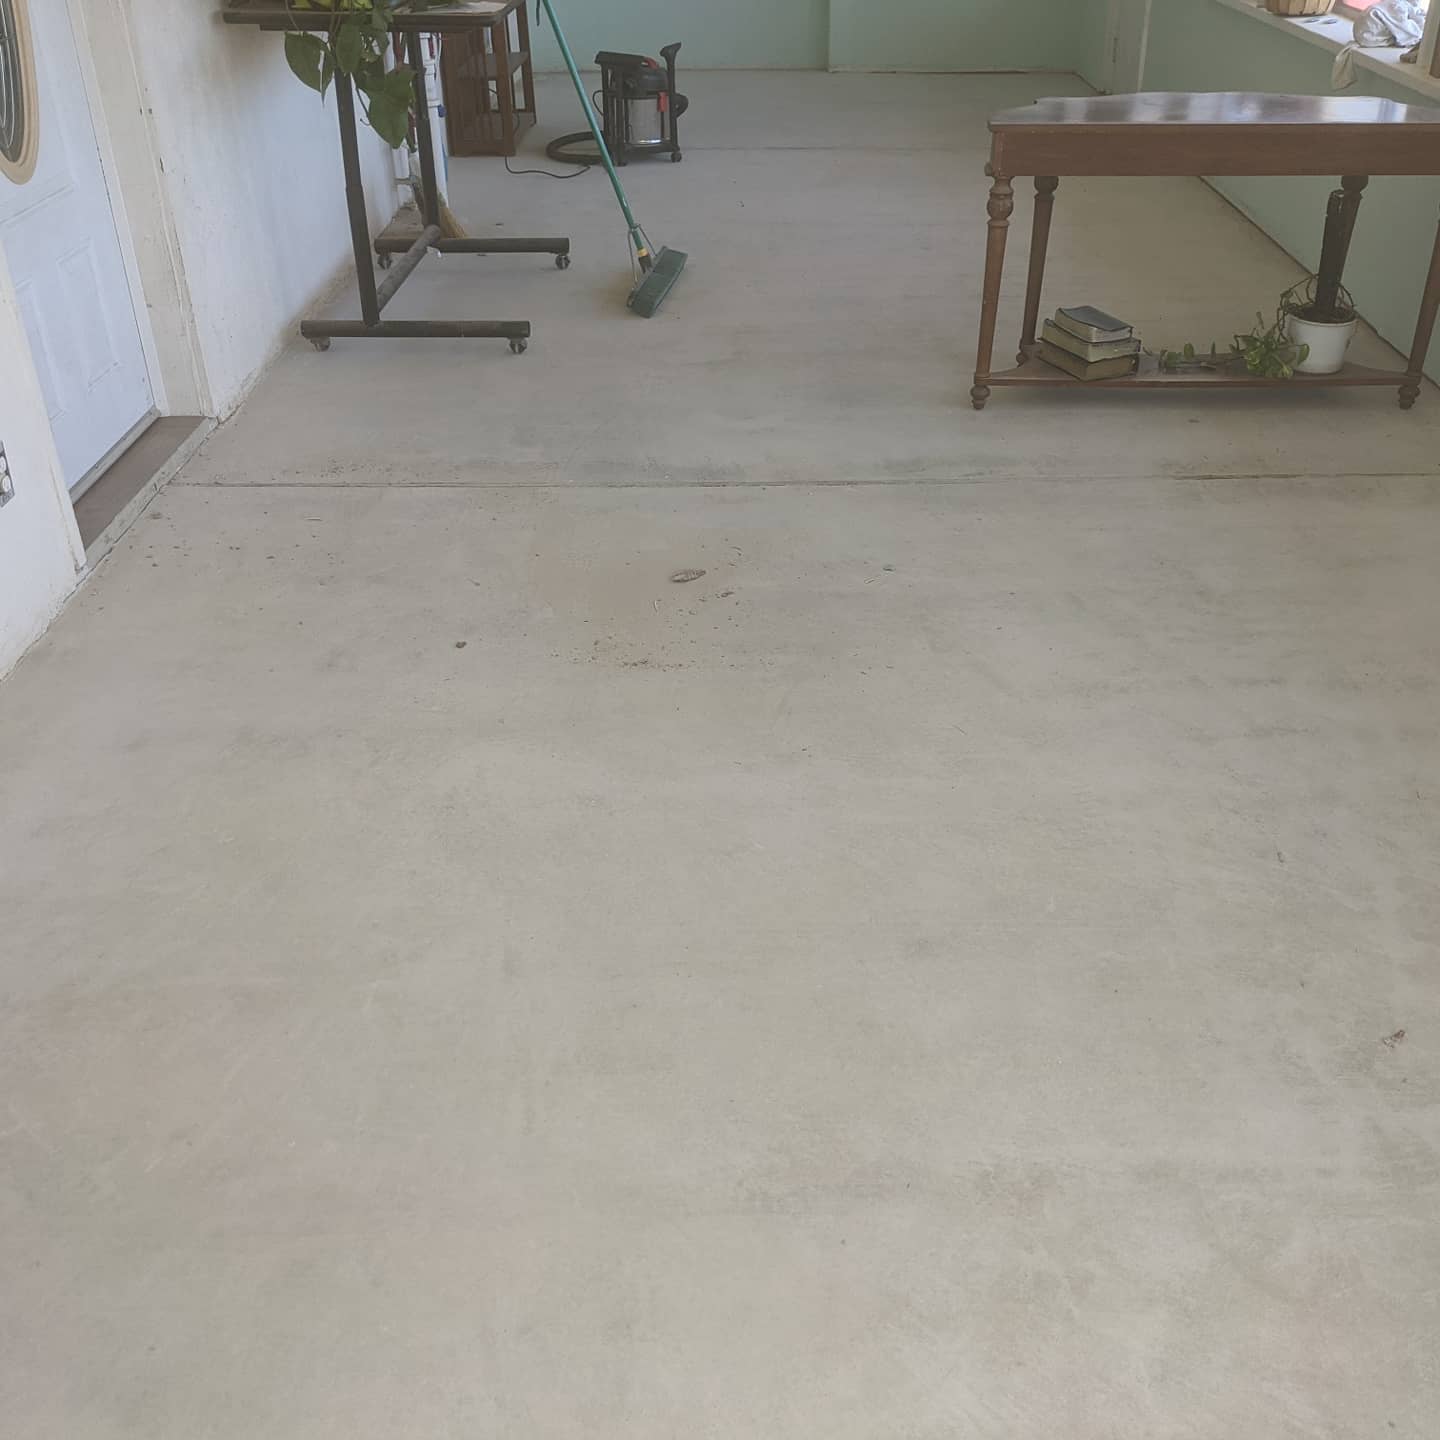 Sunroom concrete floor